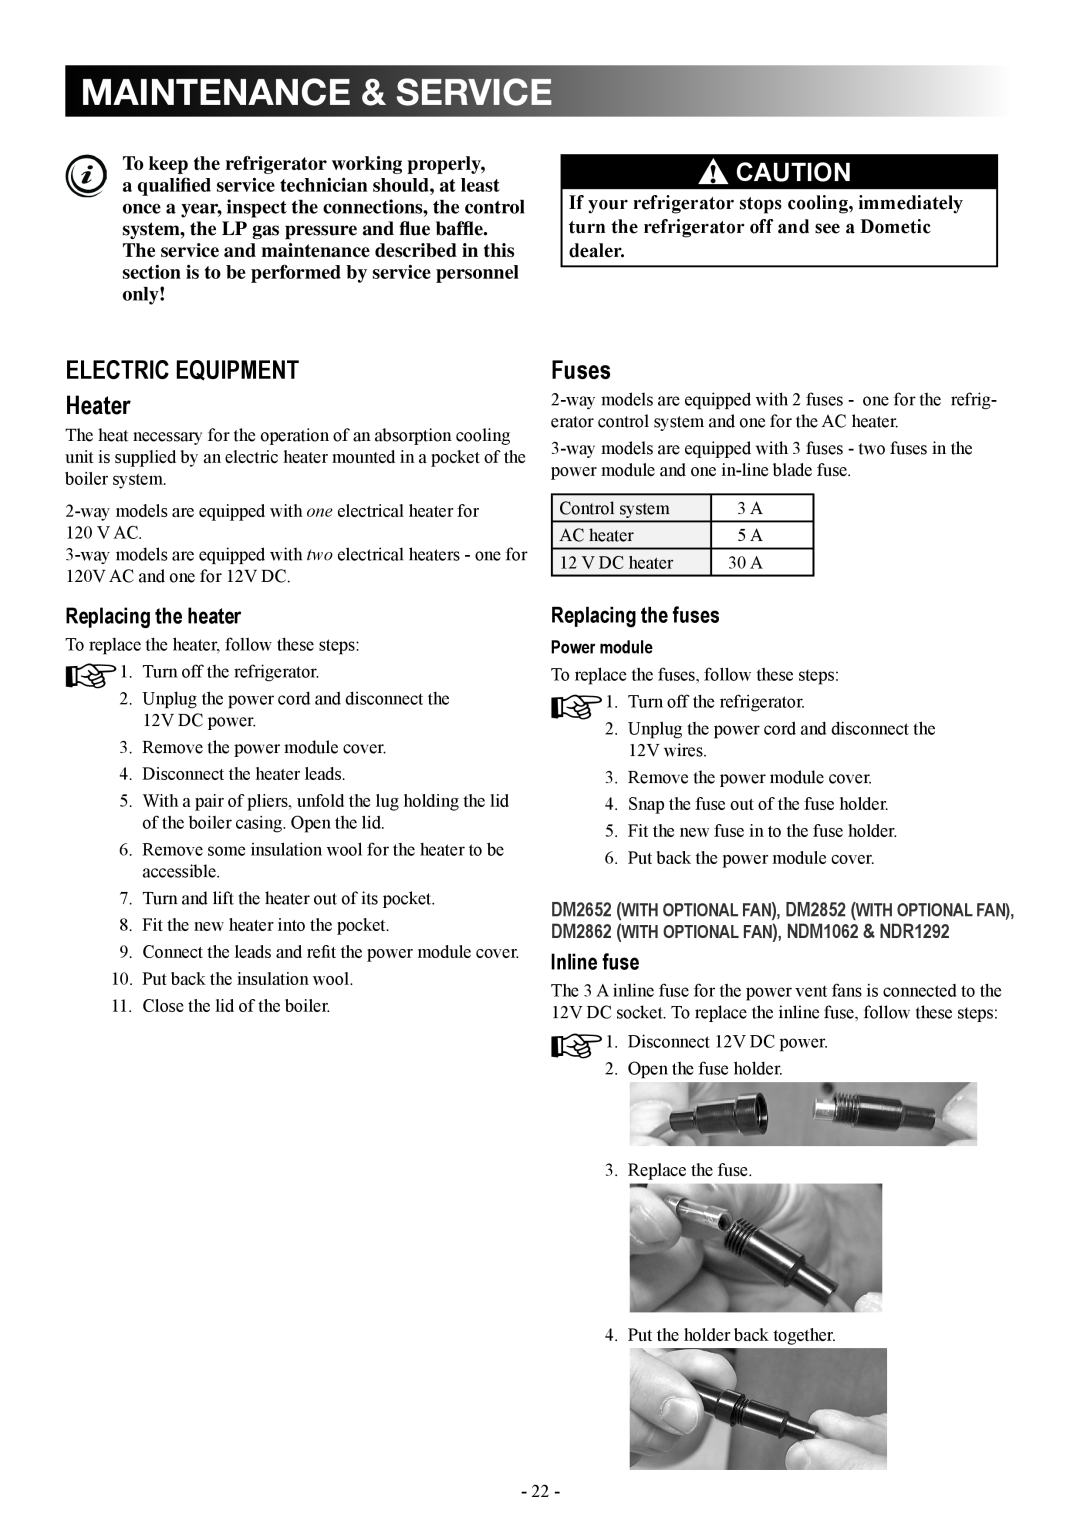 Dometic DM2862 manual maintenance & service, 6! CAUTION, Electric equipment Heater, Fuses 